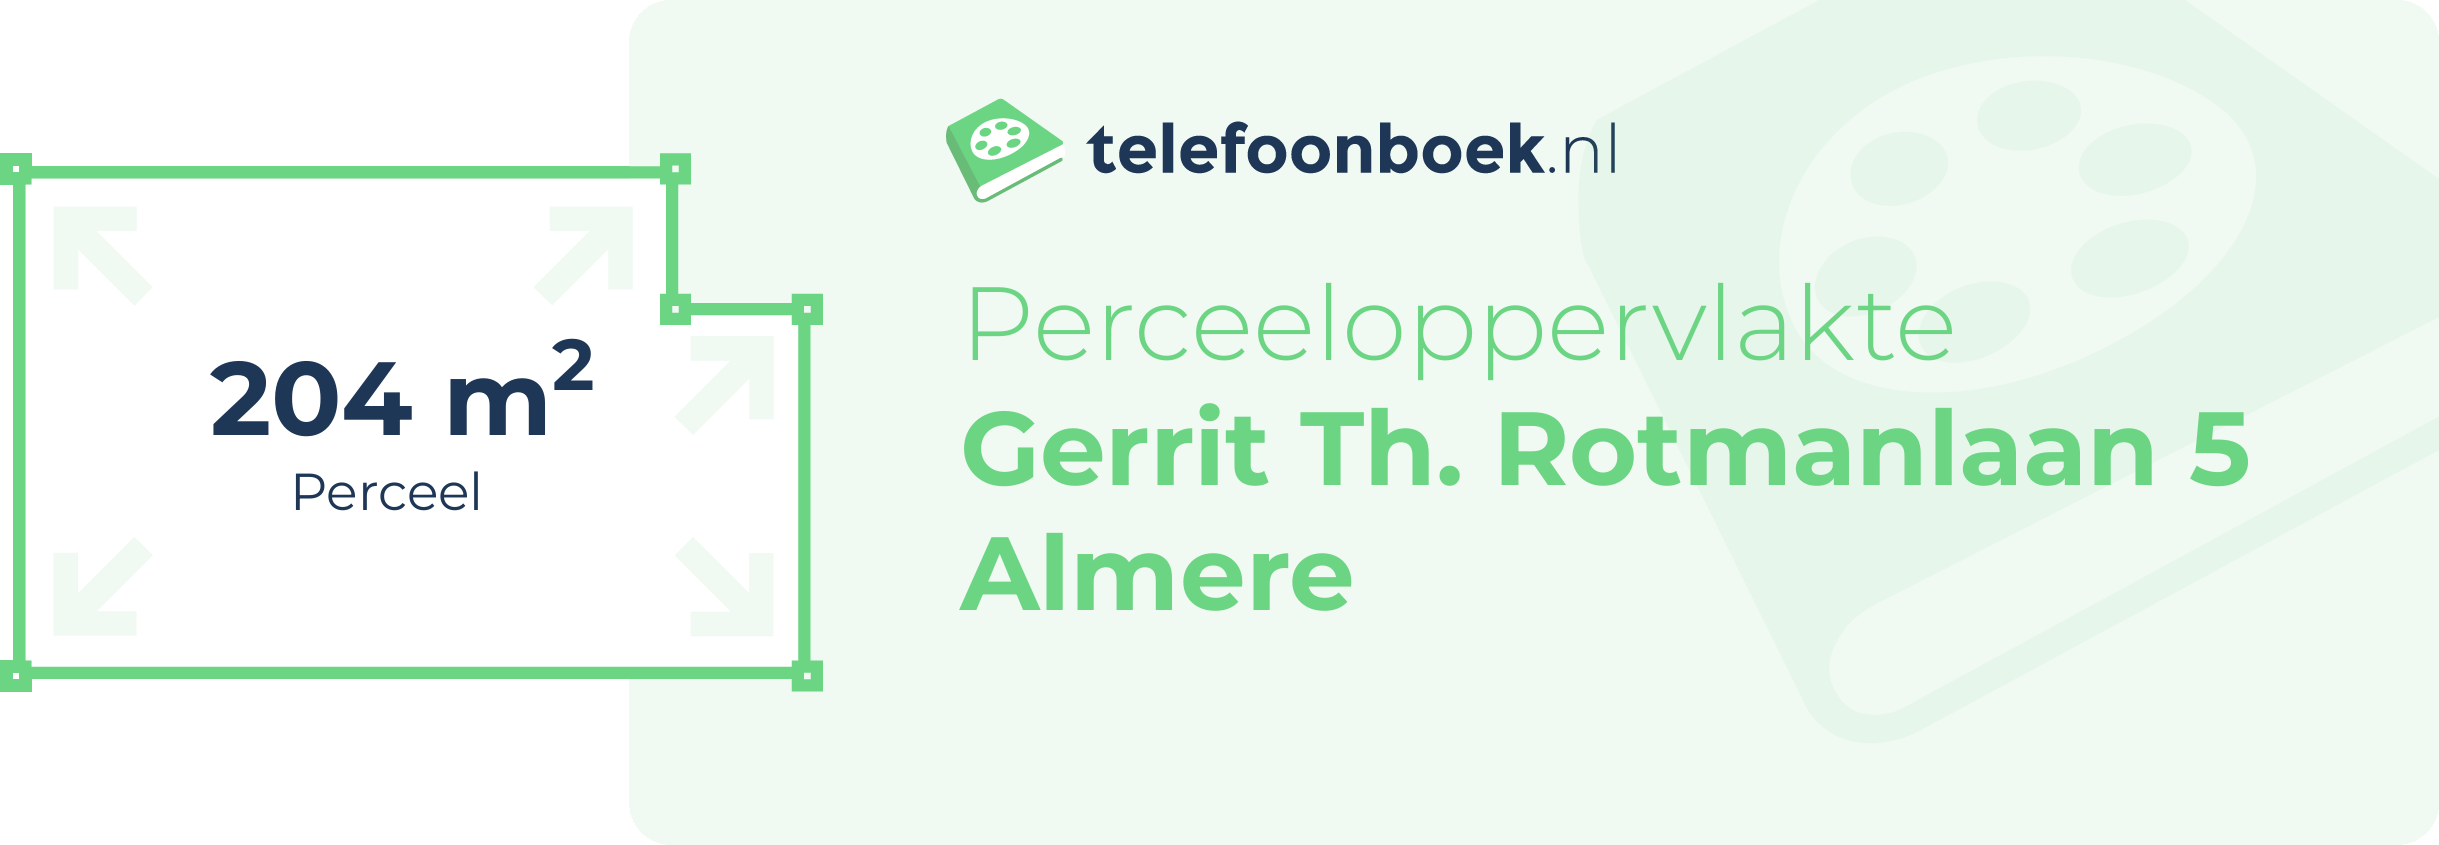 Perceeloppervlakte Gerrit Th. Rotmanlaan 5 Almere